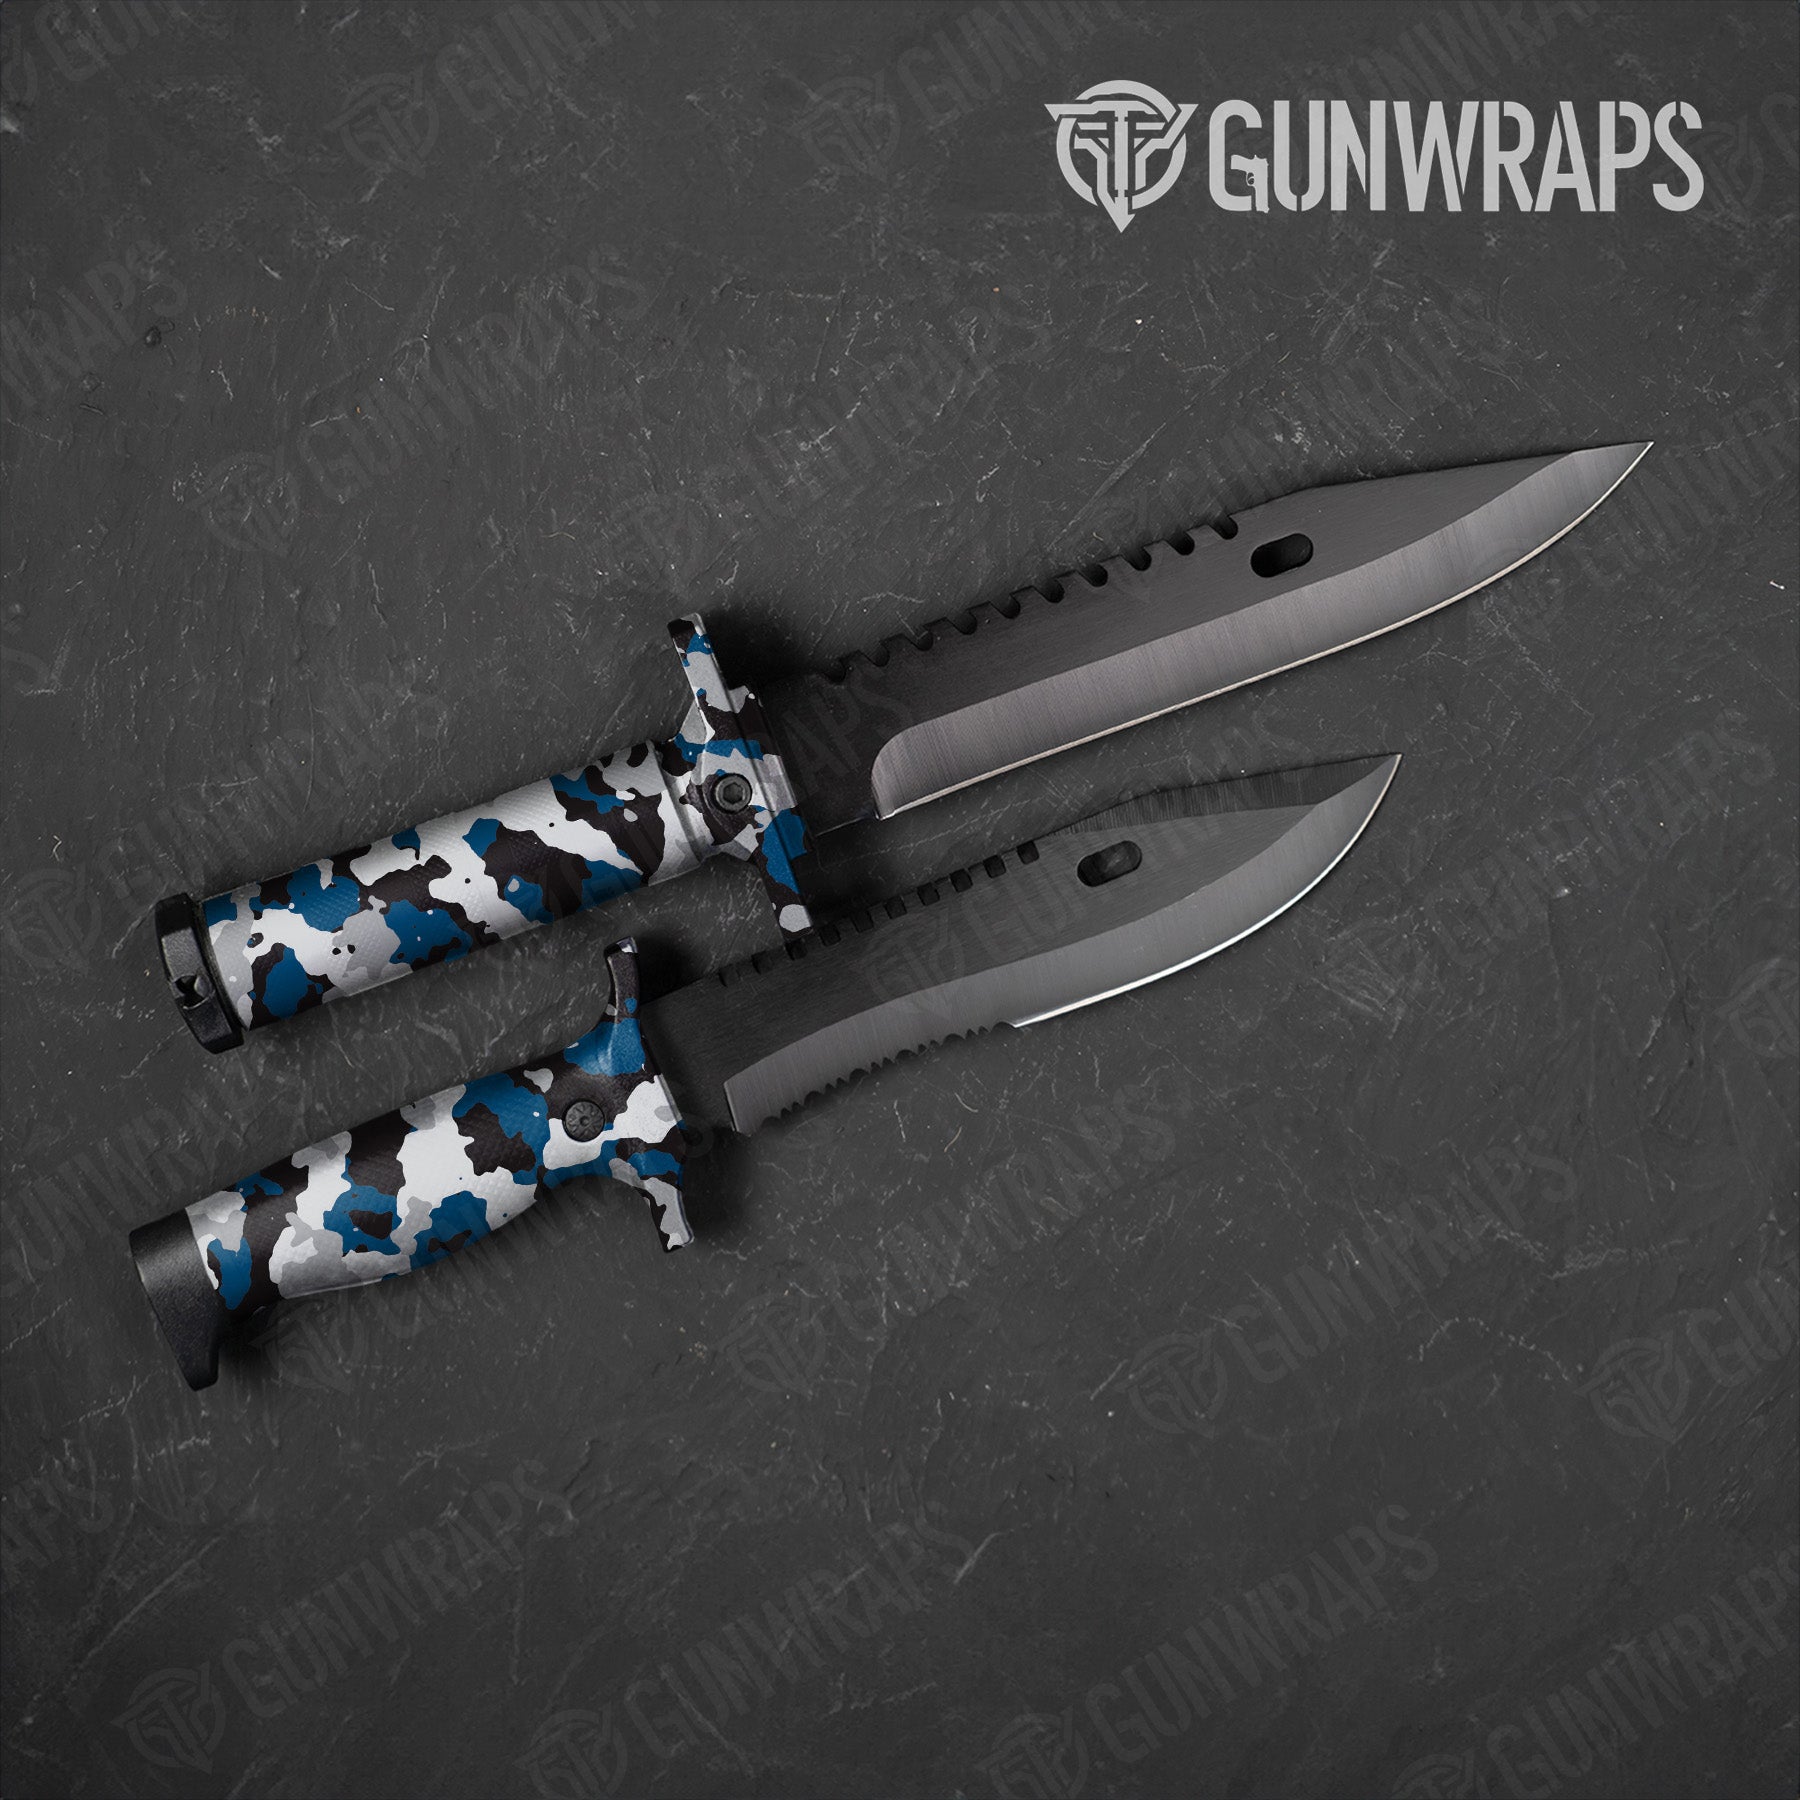 Cumulus Blue Tiger Camo Knife Gear Skin Vinyl Wrap